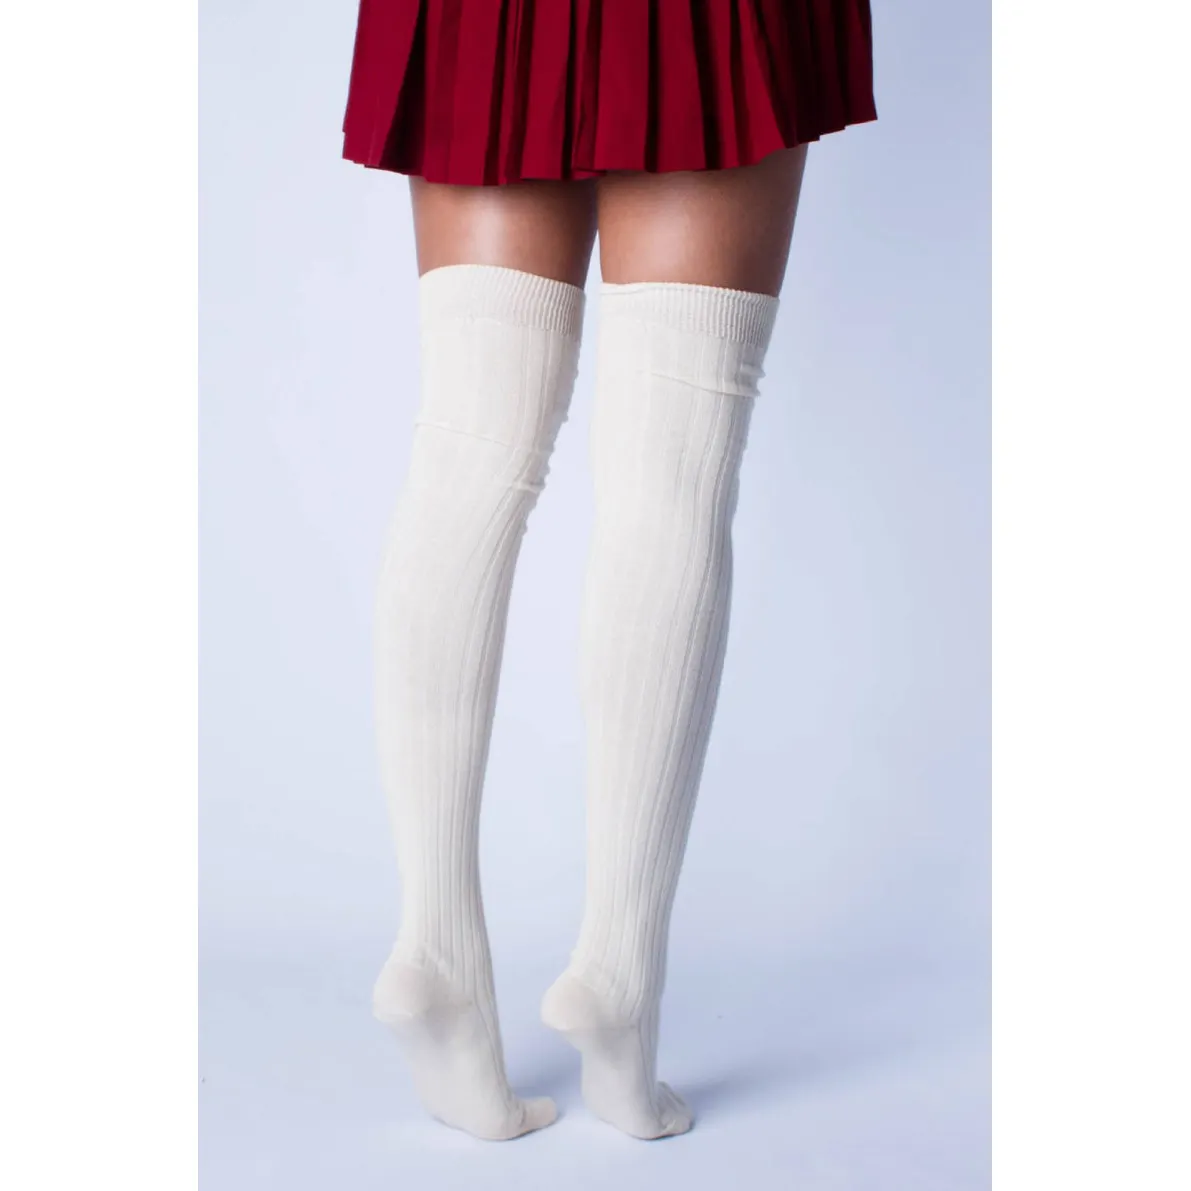 TA2510 Custom Sexy Boot Socks High Quality Cotton Girls Thigh High Slouchy Leg Warmers